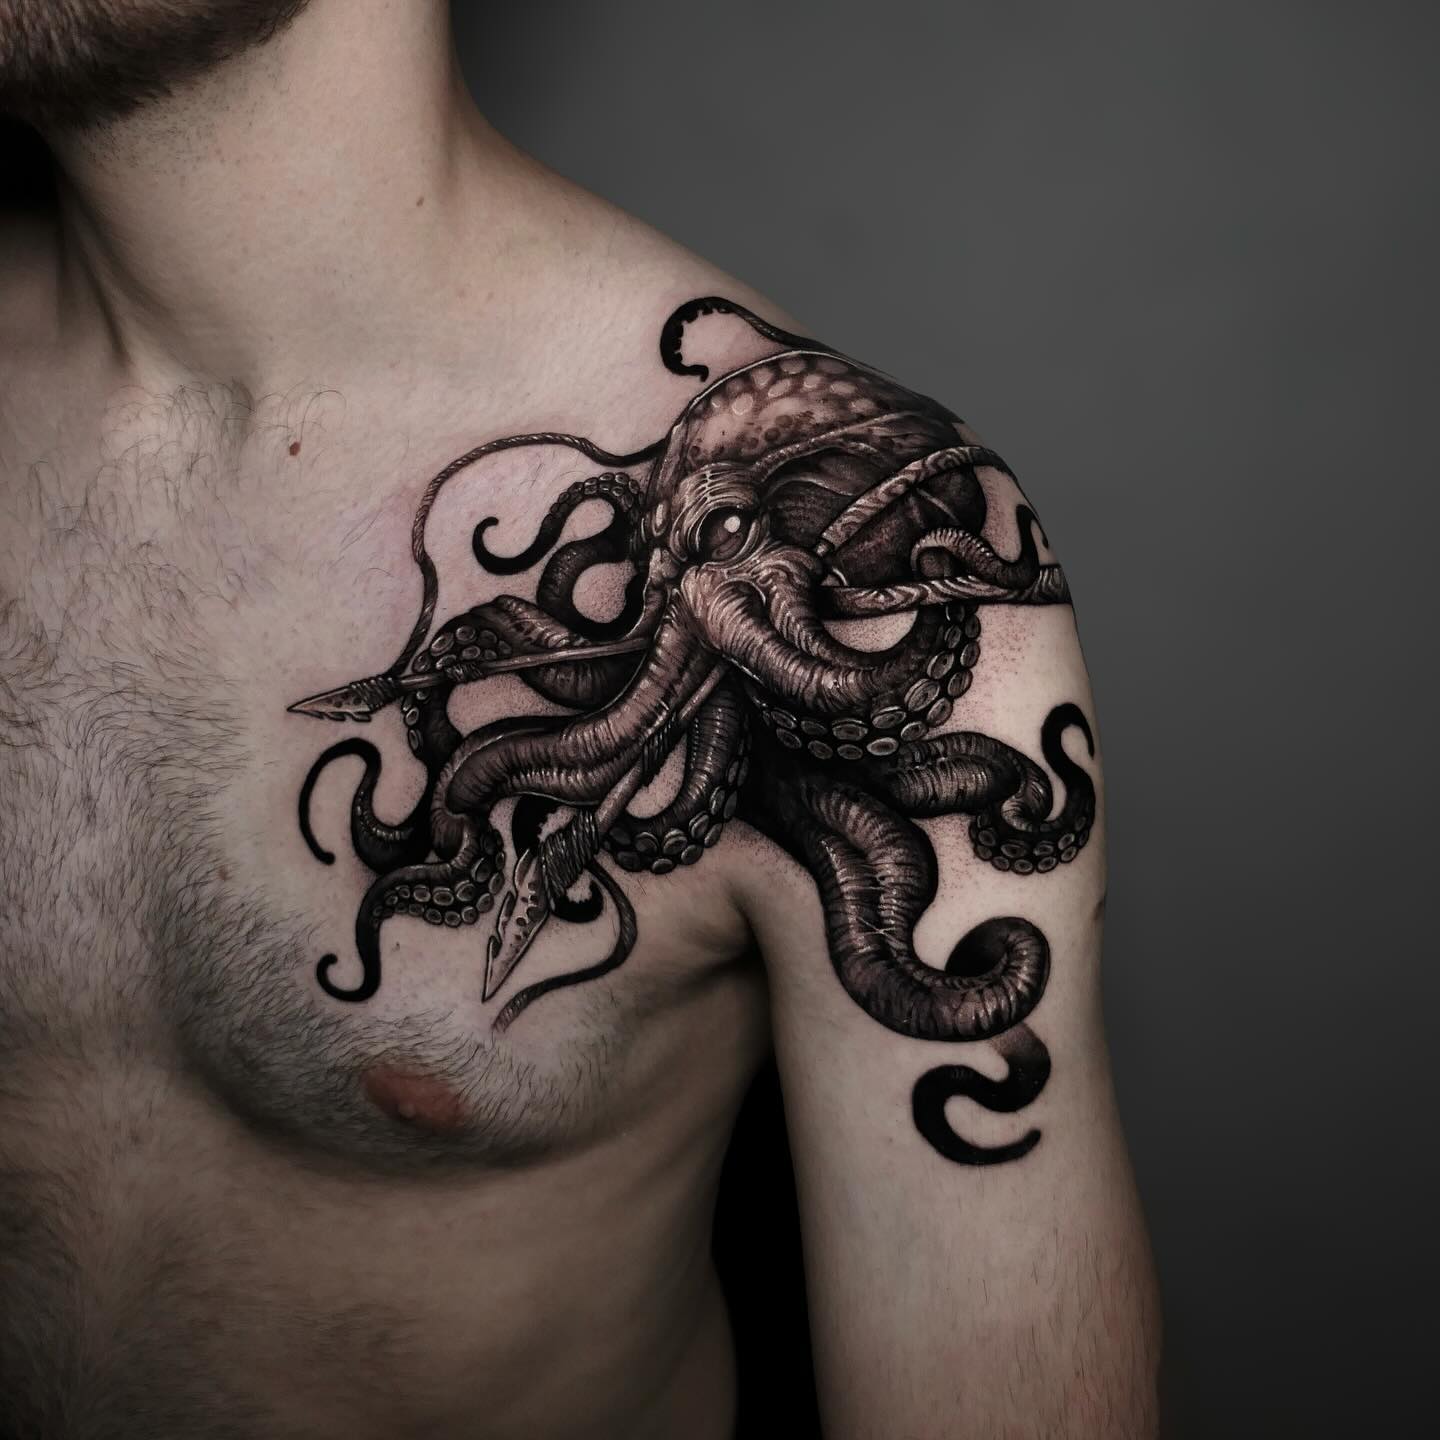 Octopus tattoo design ideas by aweichen666 tattoo